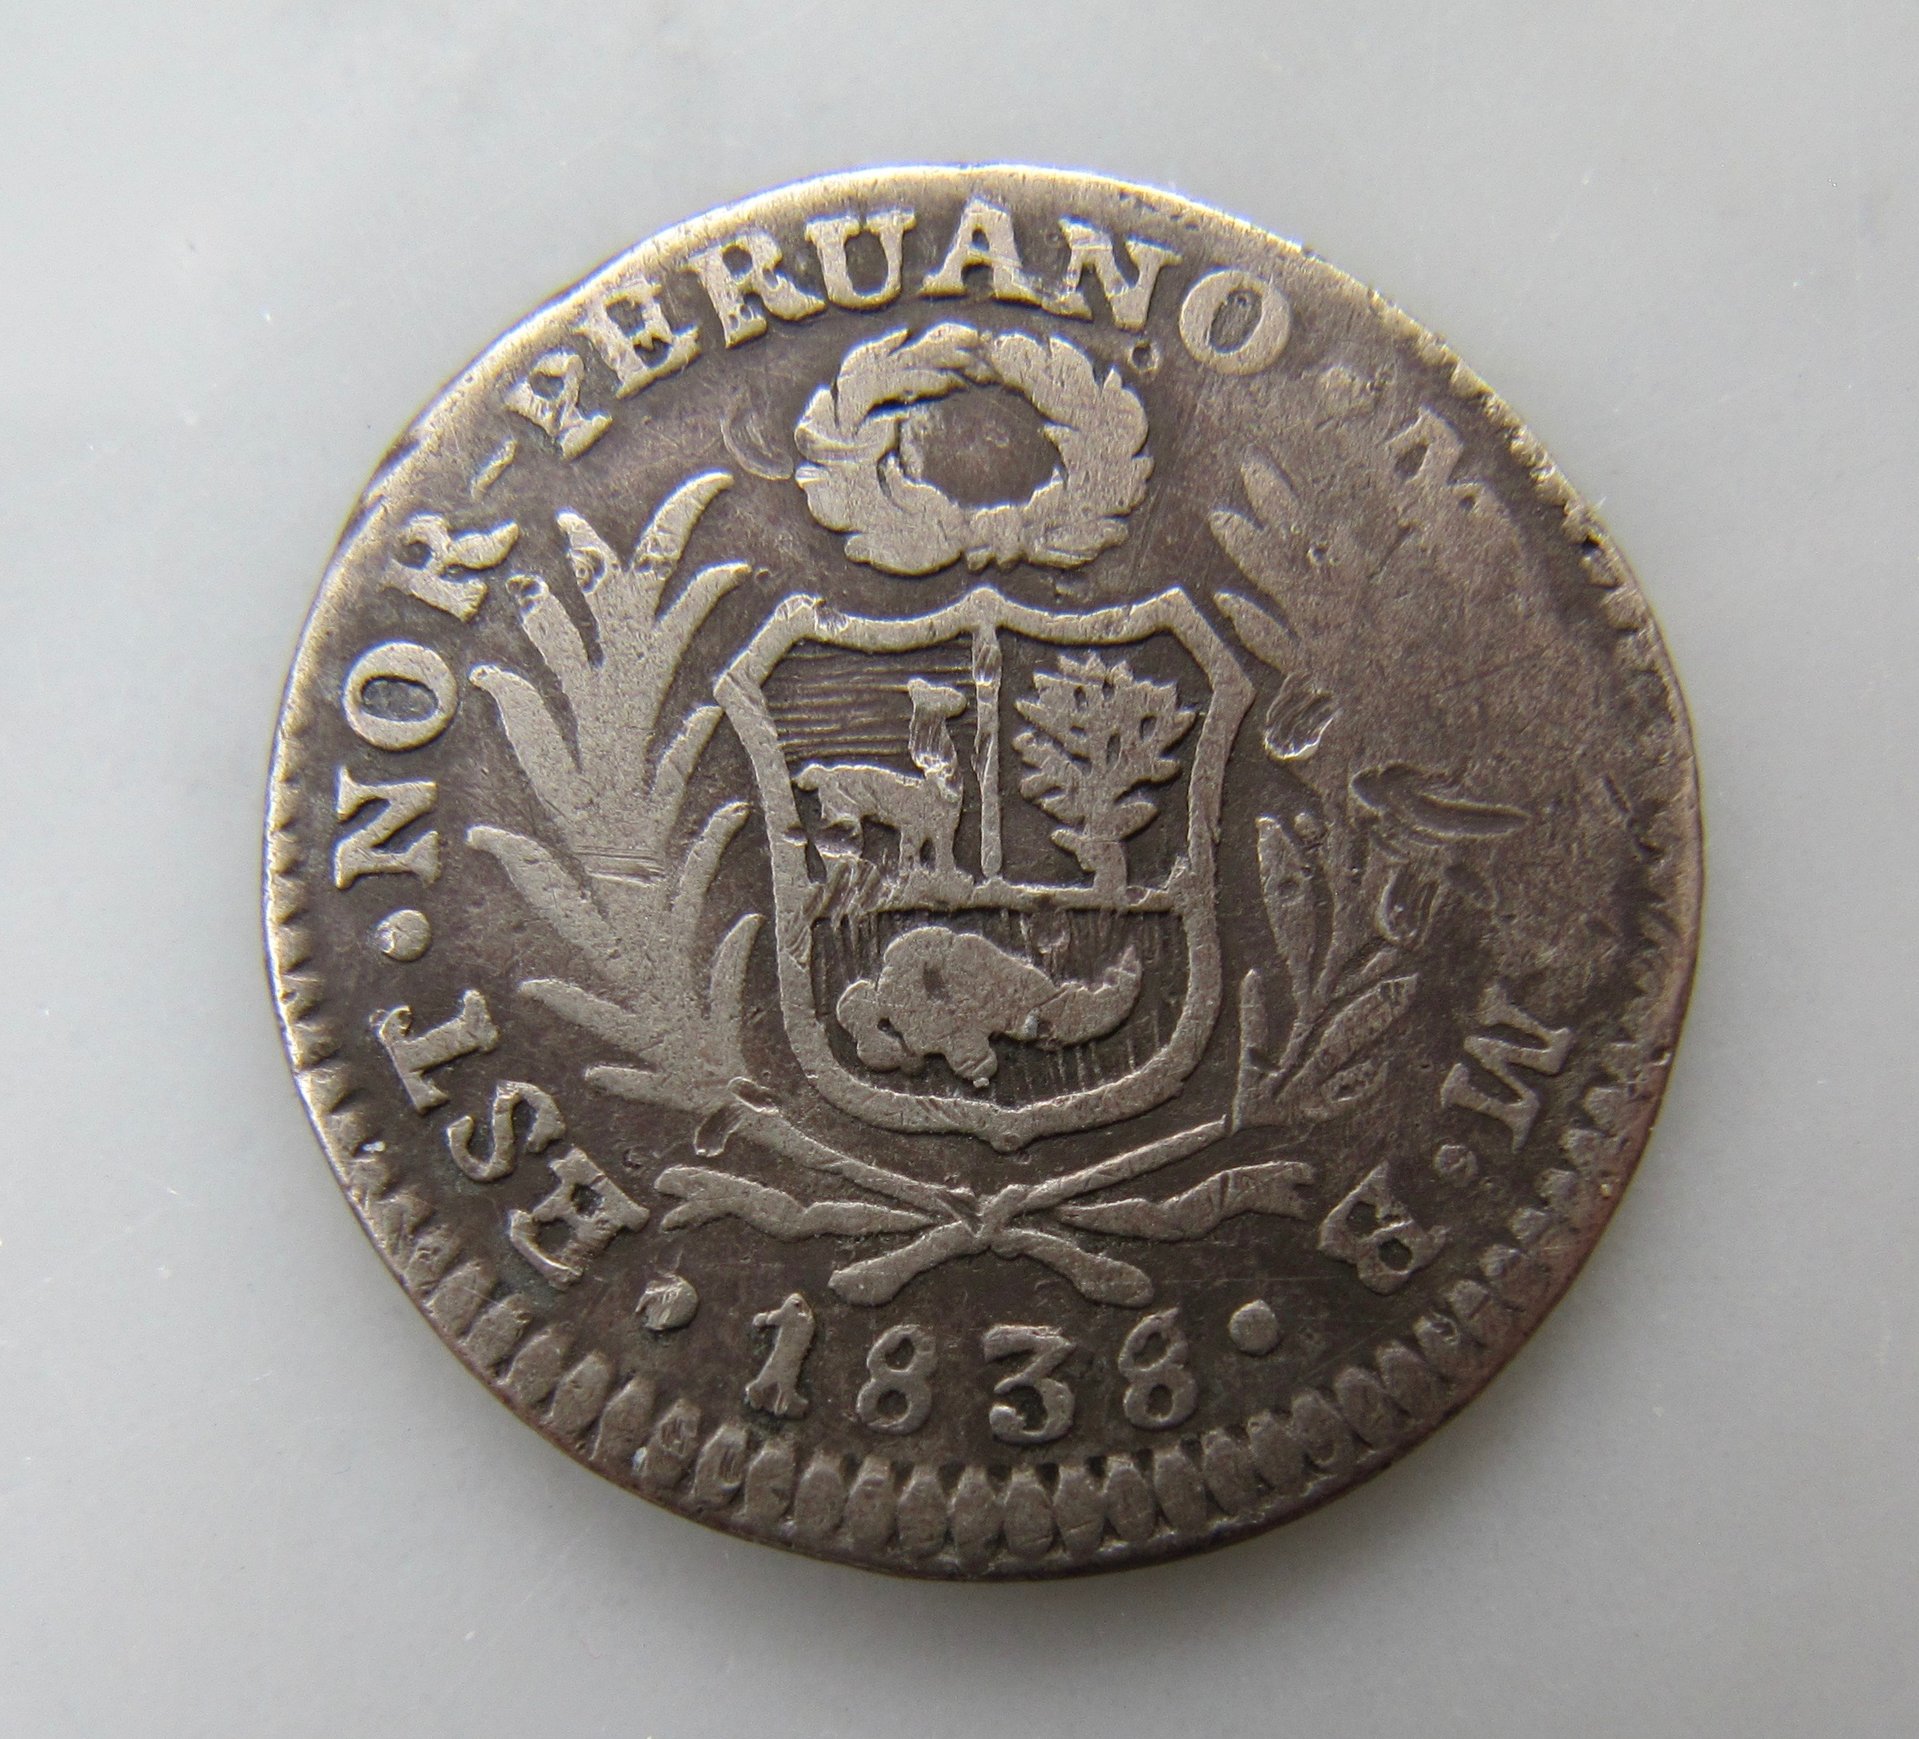 Peru Estado Nor Peruano 1 Real 1838 1st example - OBV - 1.jpg